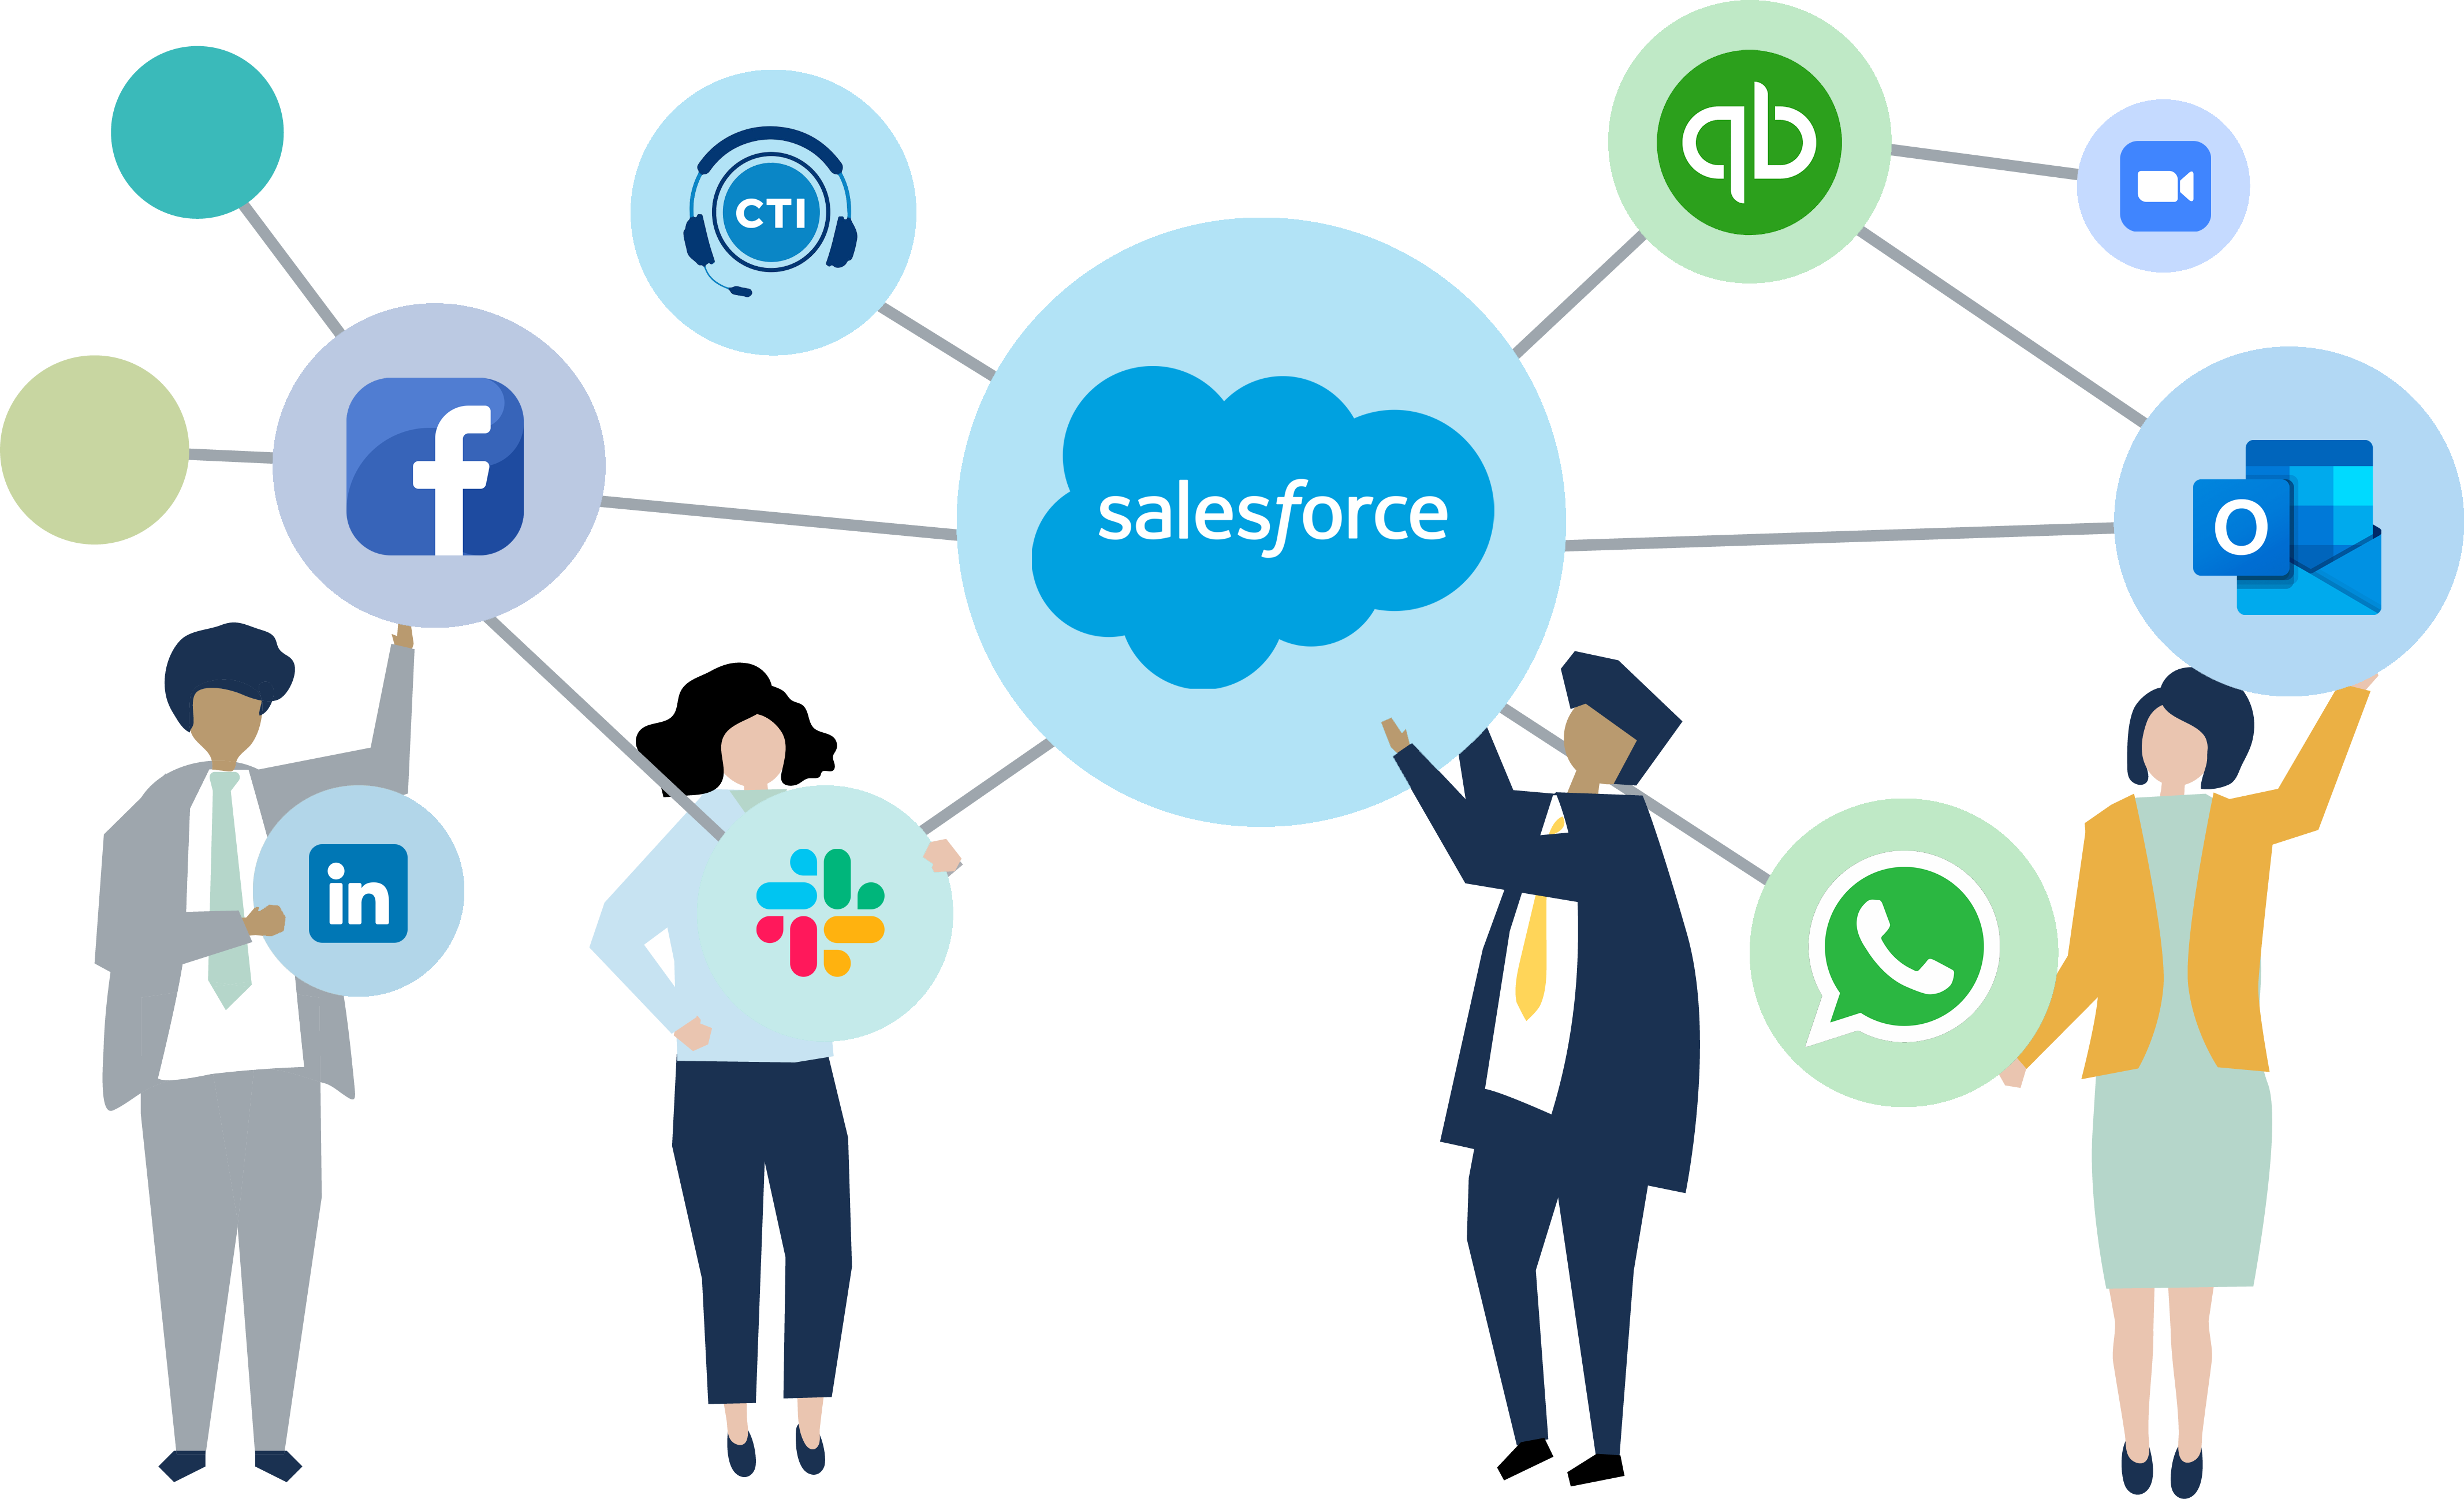 salesforce provides integration of apps like whatsapp, linkedin, mailchimp, zapier, asana, slack, zoom, facebook, outlook and more tools.